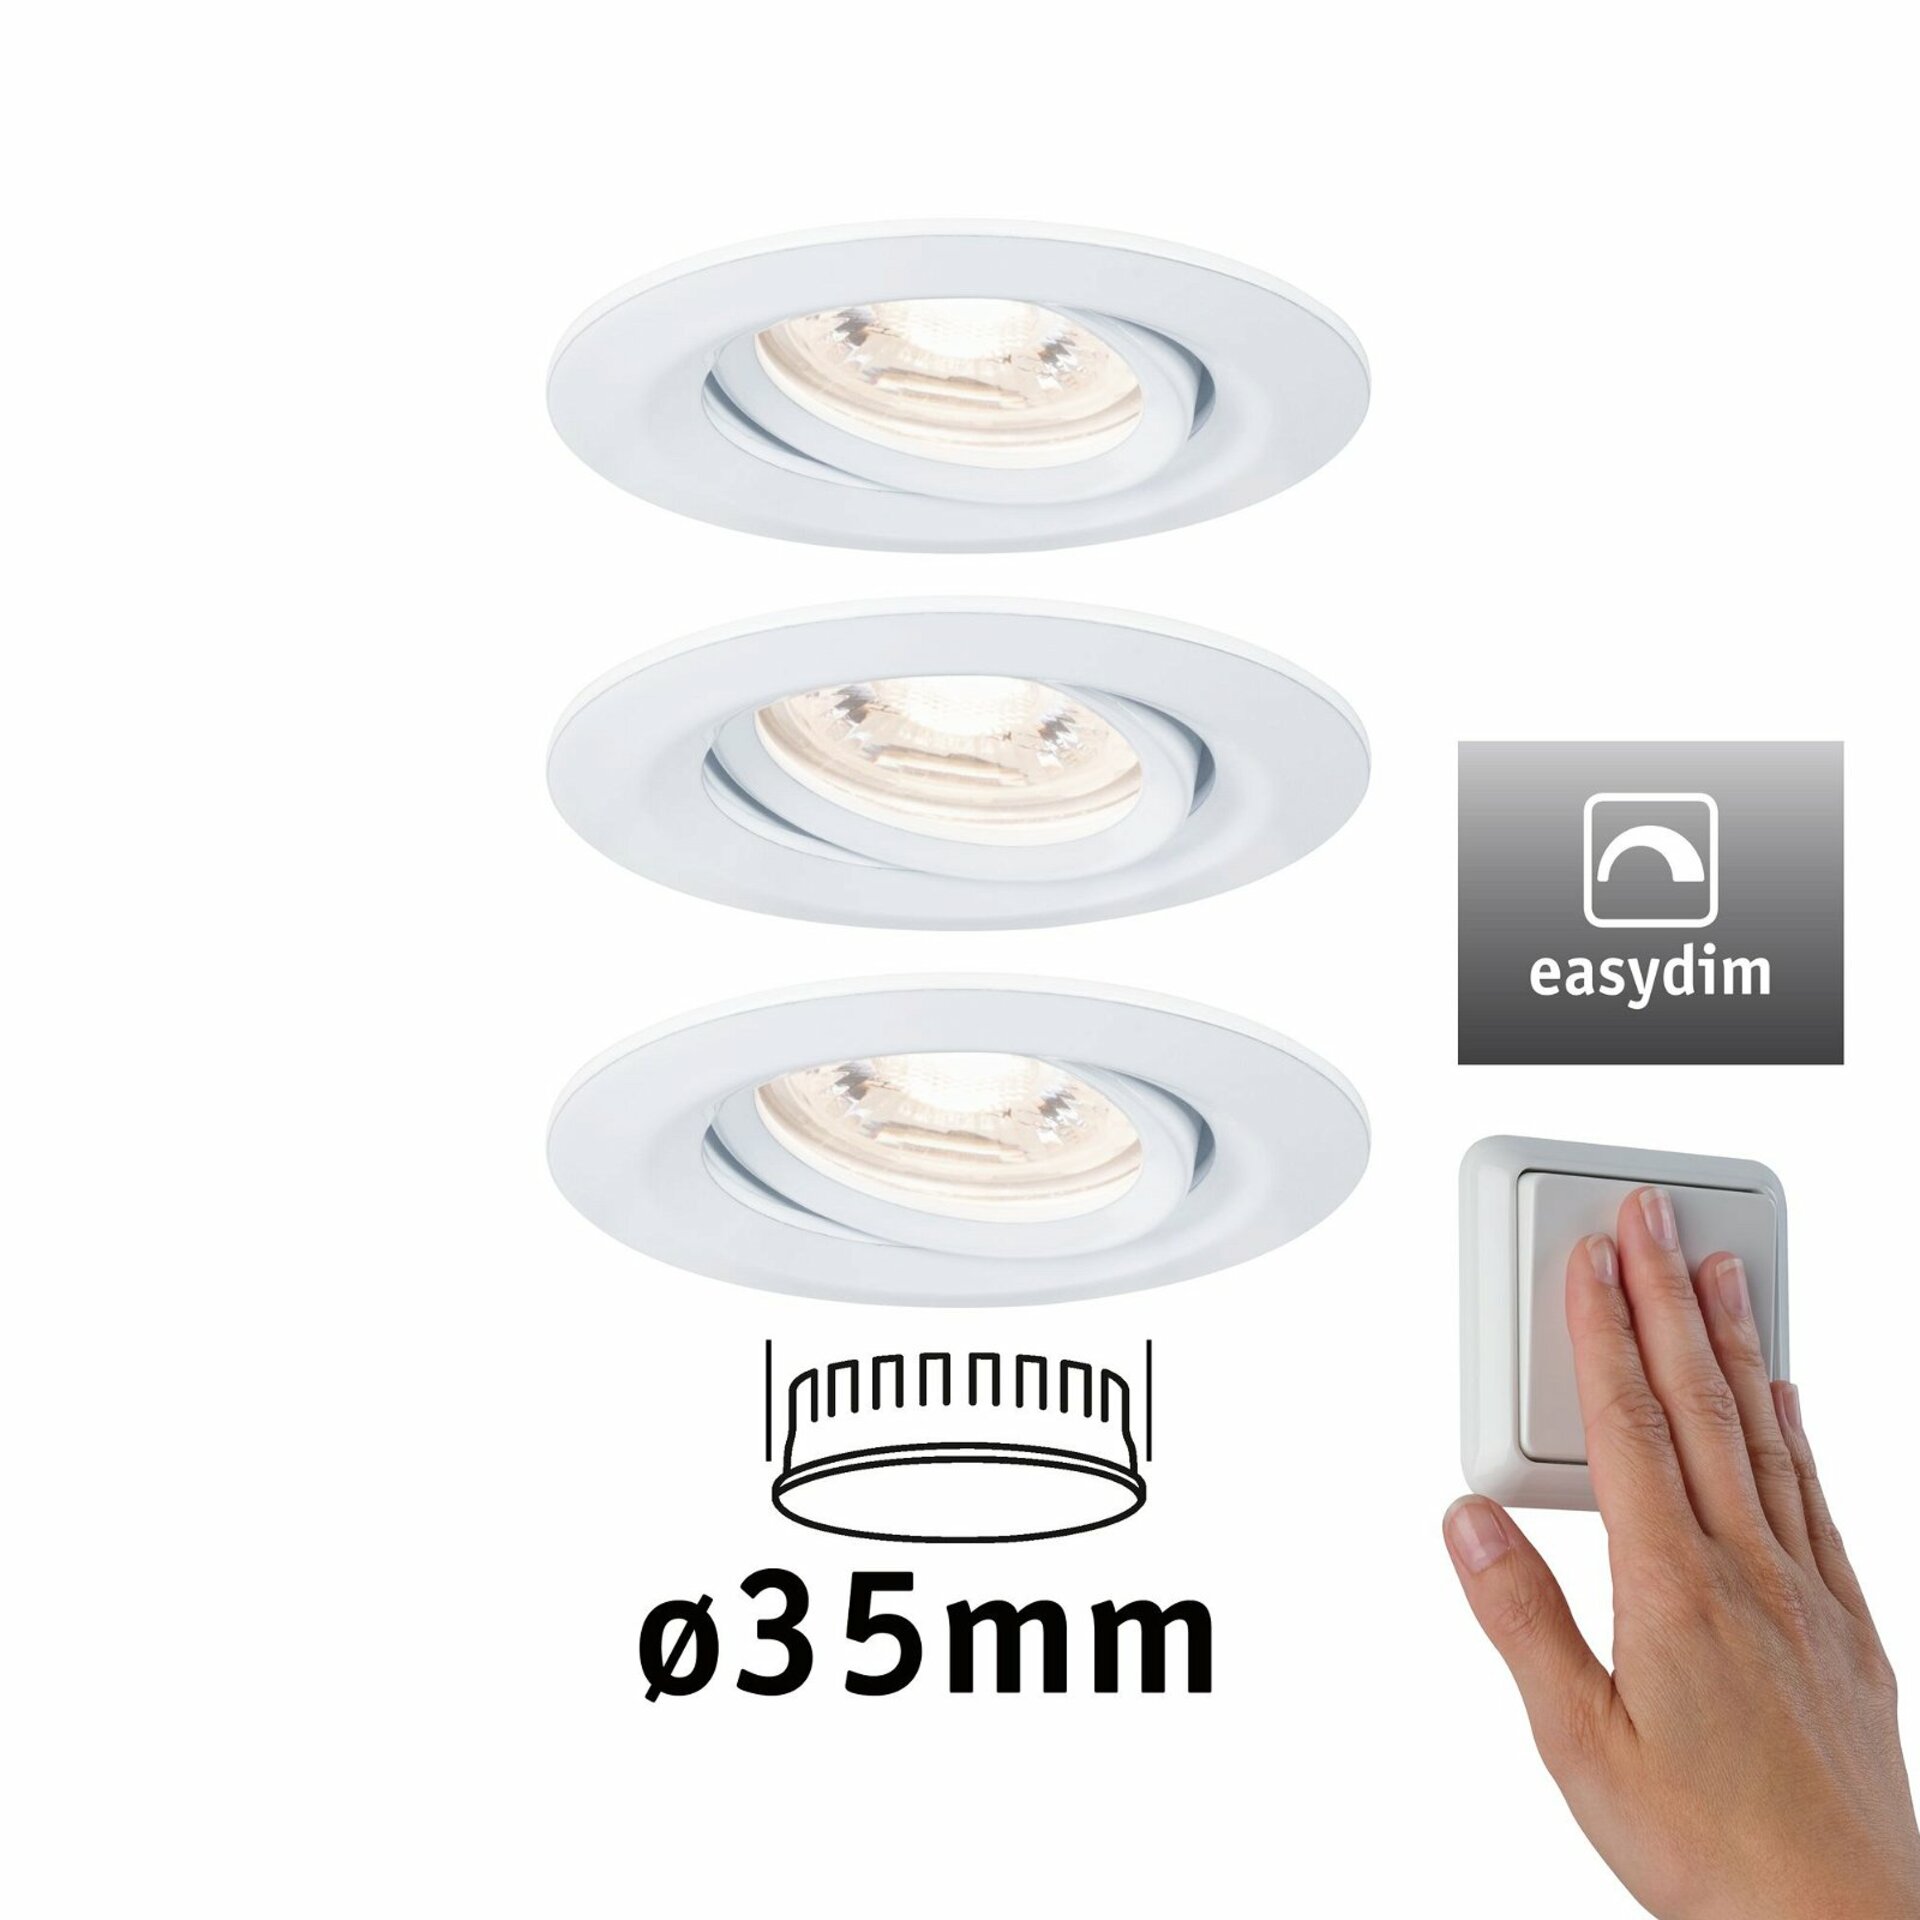 PAULMANN LED vestavné svítidlo Nova mini Plus EasyDim výklopné 3x4,2W 2700K bílá mat 230V 929.71